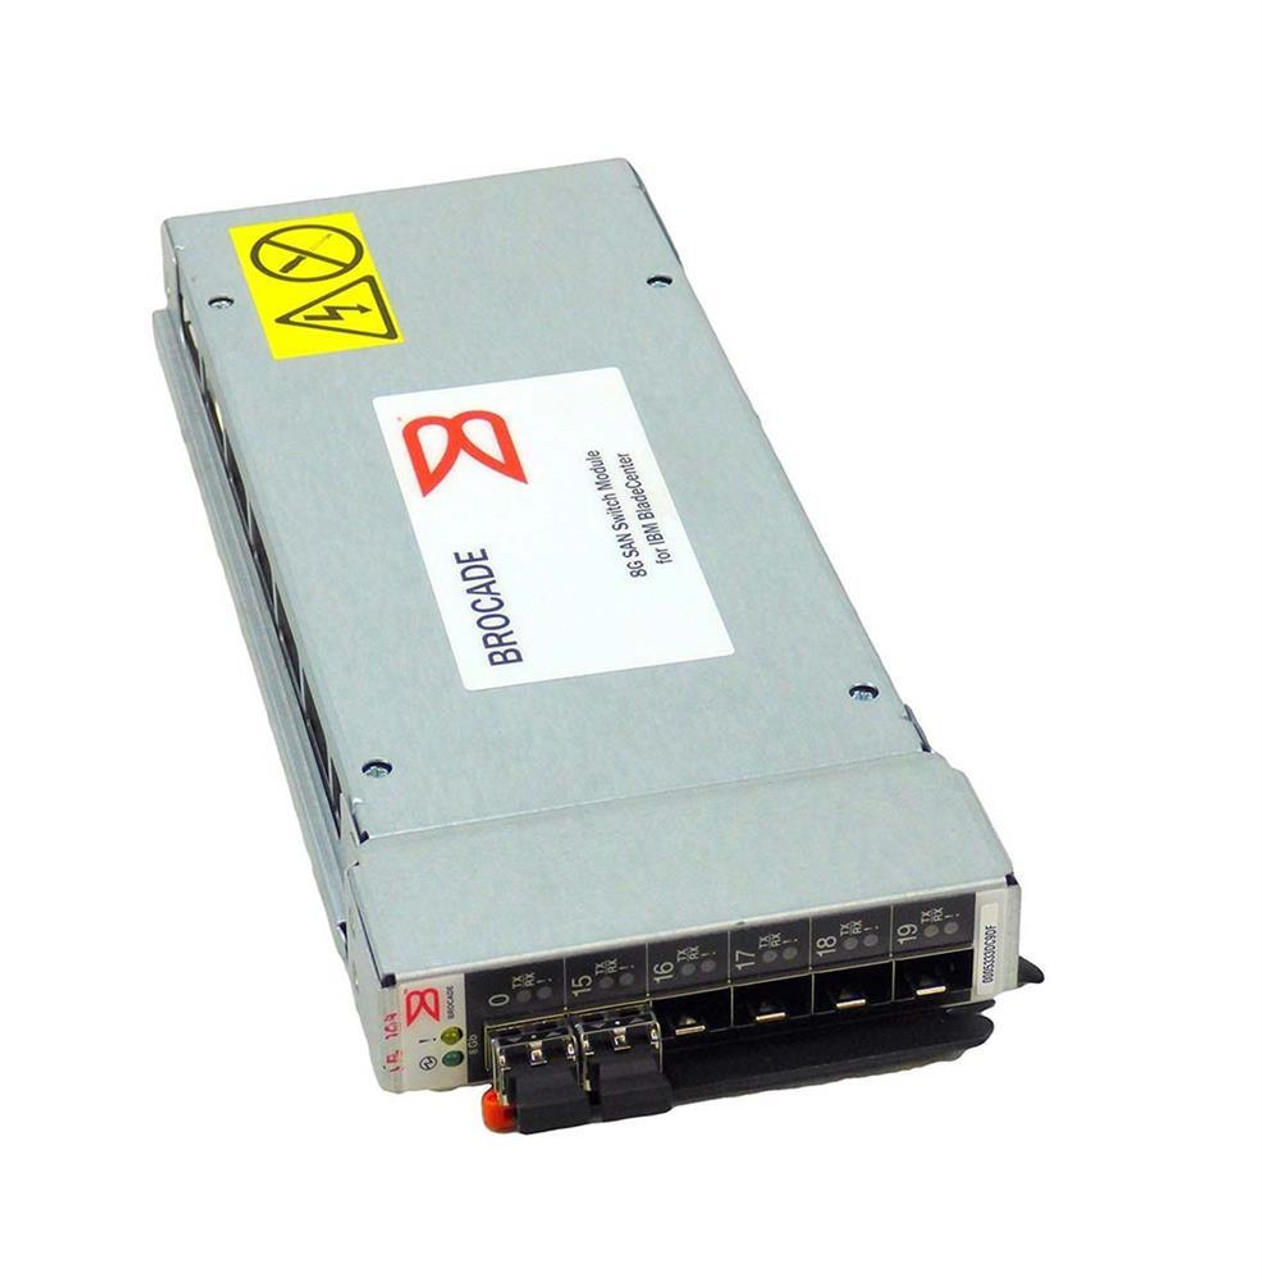 46C9300-06 Brocade 8G SAN Switch Modules for Ibm Bladecenter (Refurbished)